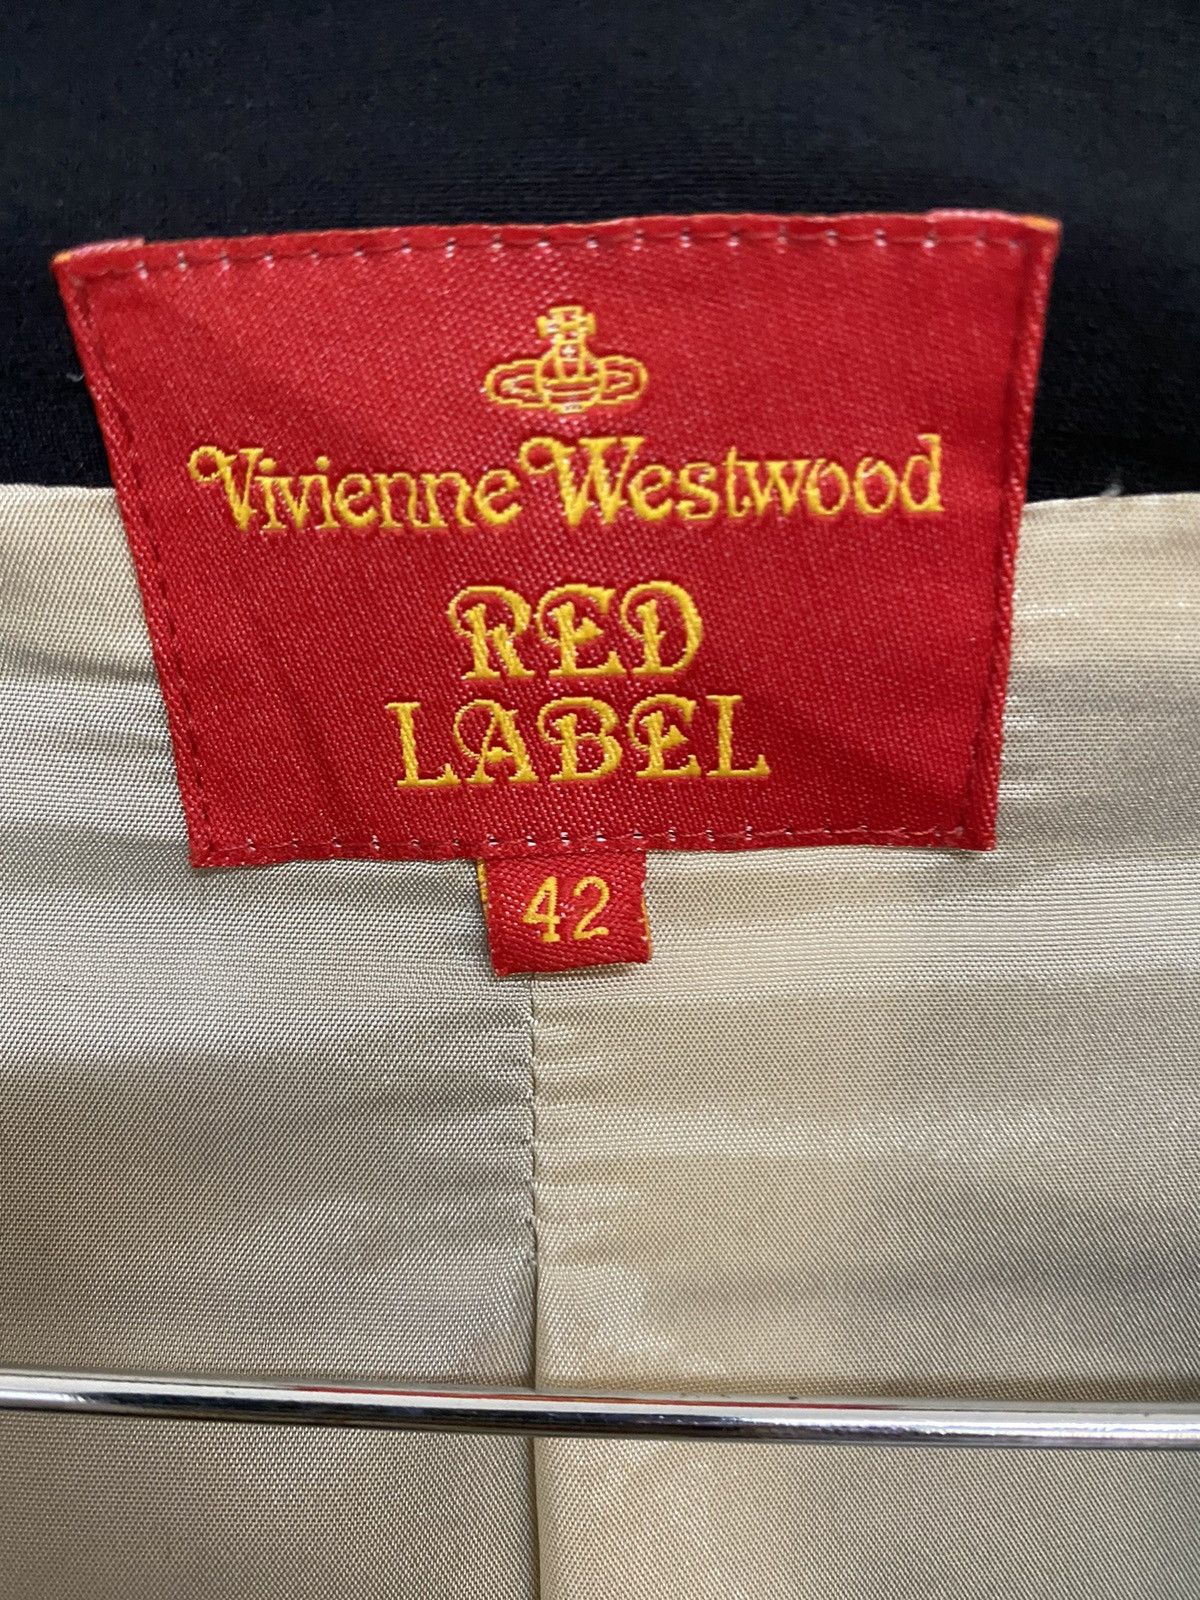 Vivienne Westwood Red Label Blazer Jacket Made in Italy - 9